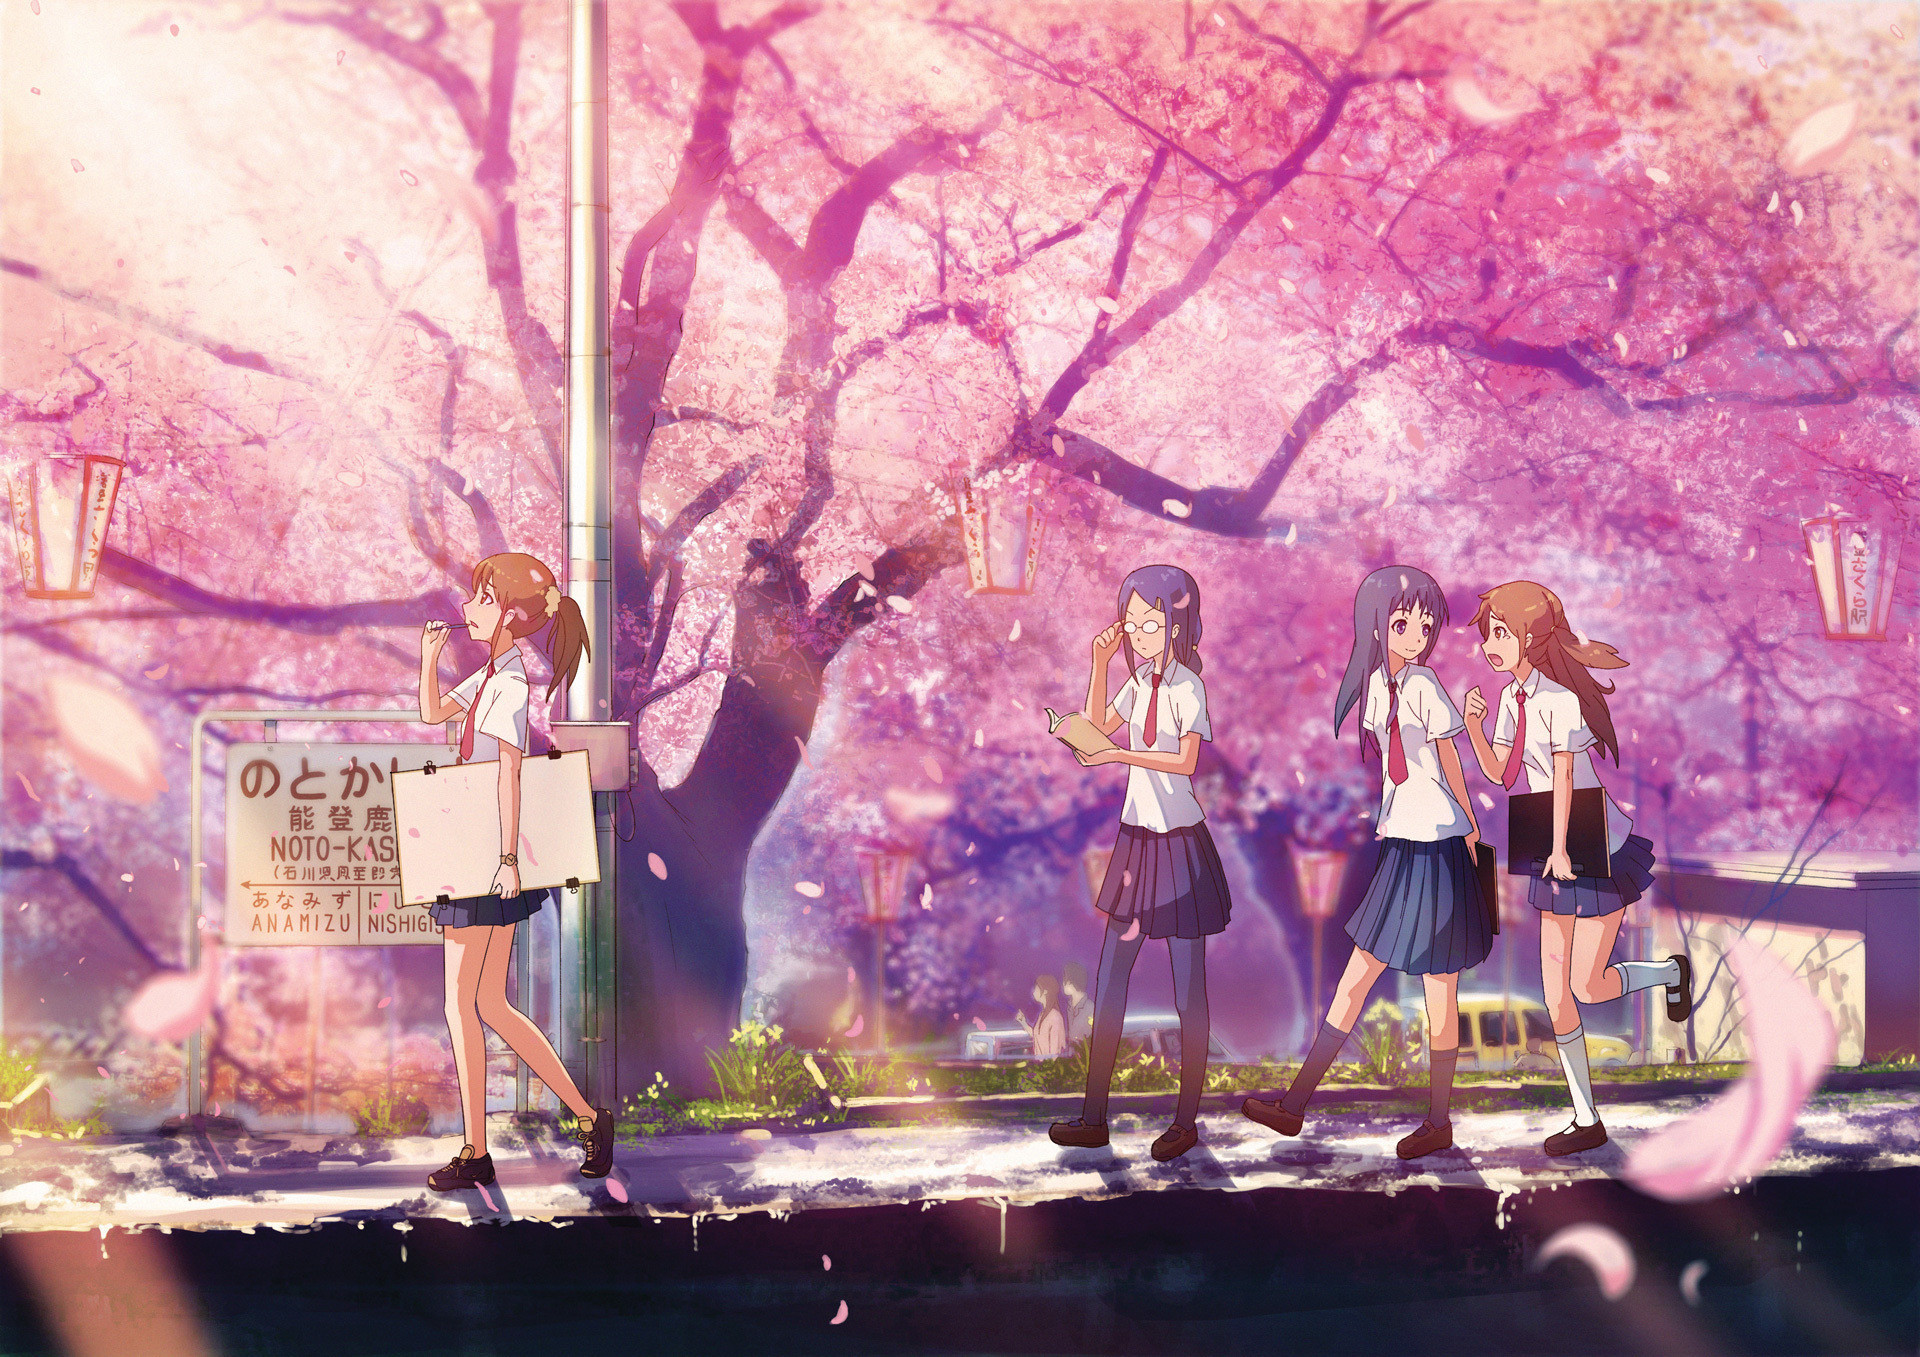 Anime Scenery wallpaper Anime Landscape Pinterest Anime scenery, Scenery and Anime